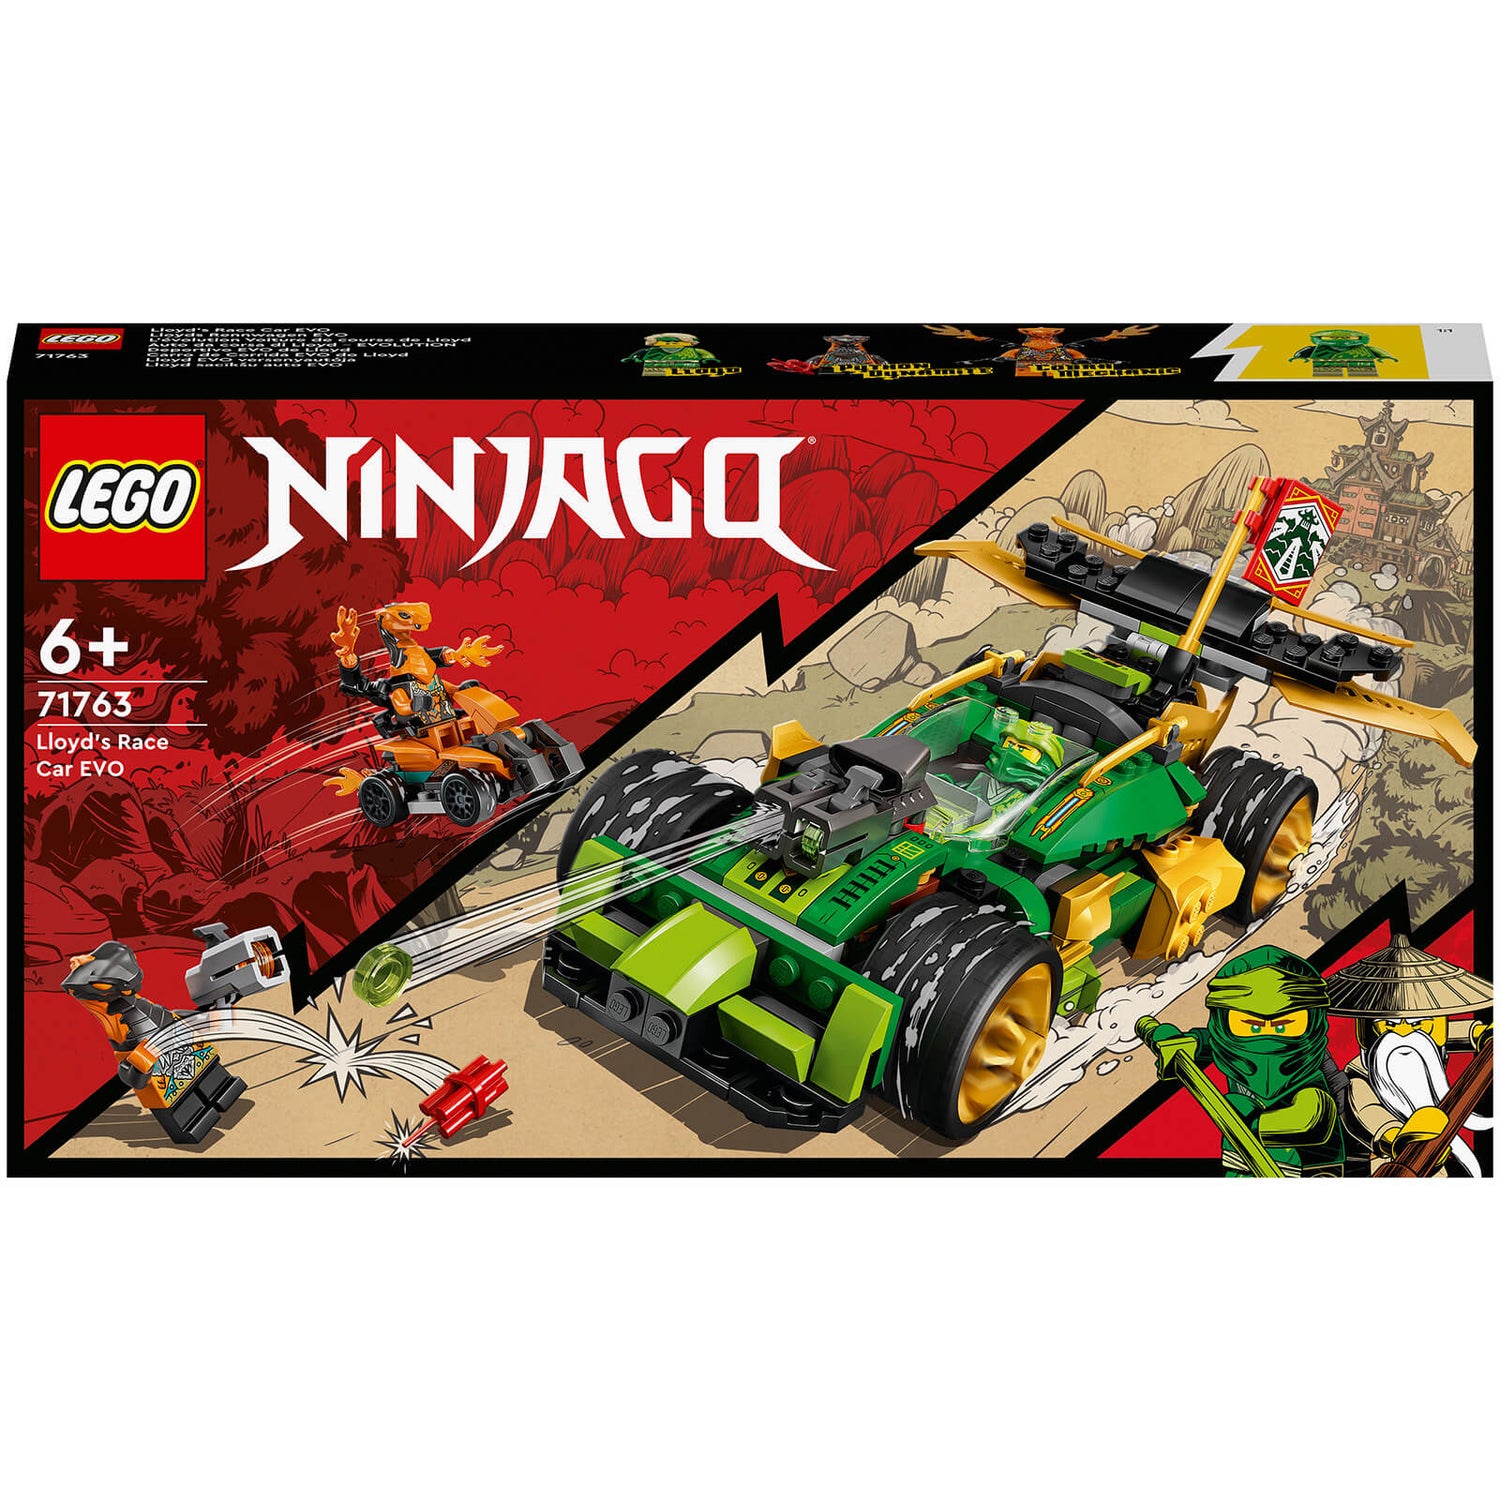 LEGO Ninjago: Lloyd’s Race Car EVO (71763)